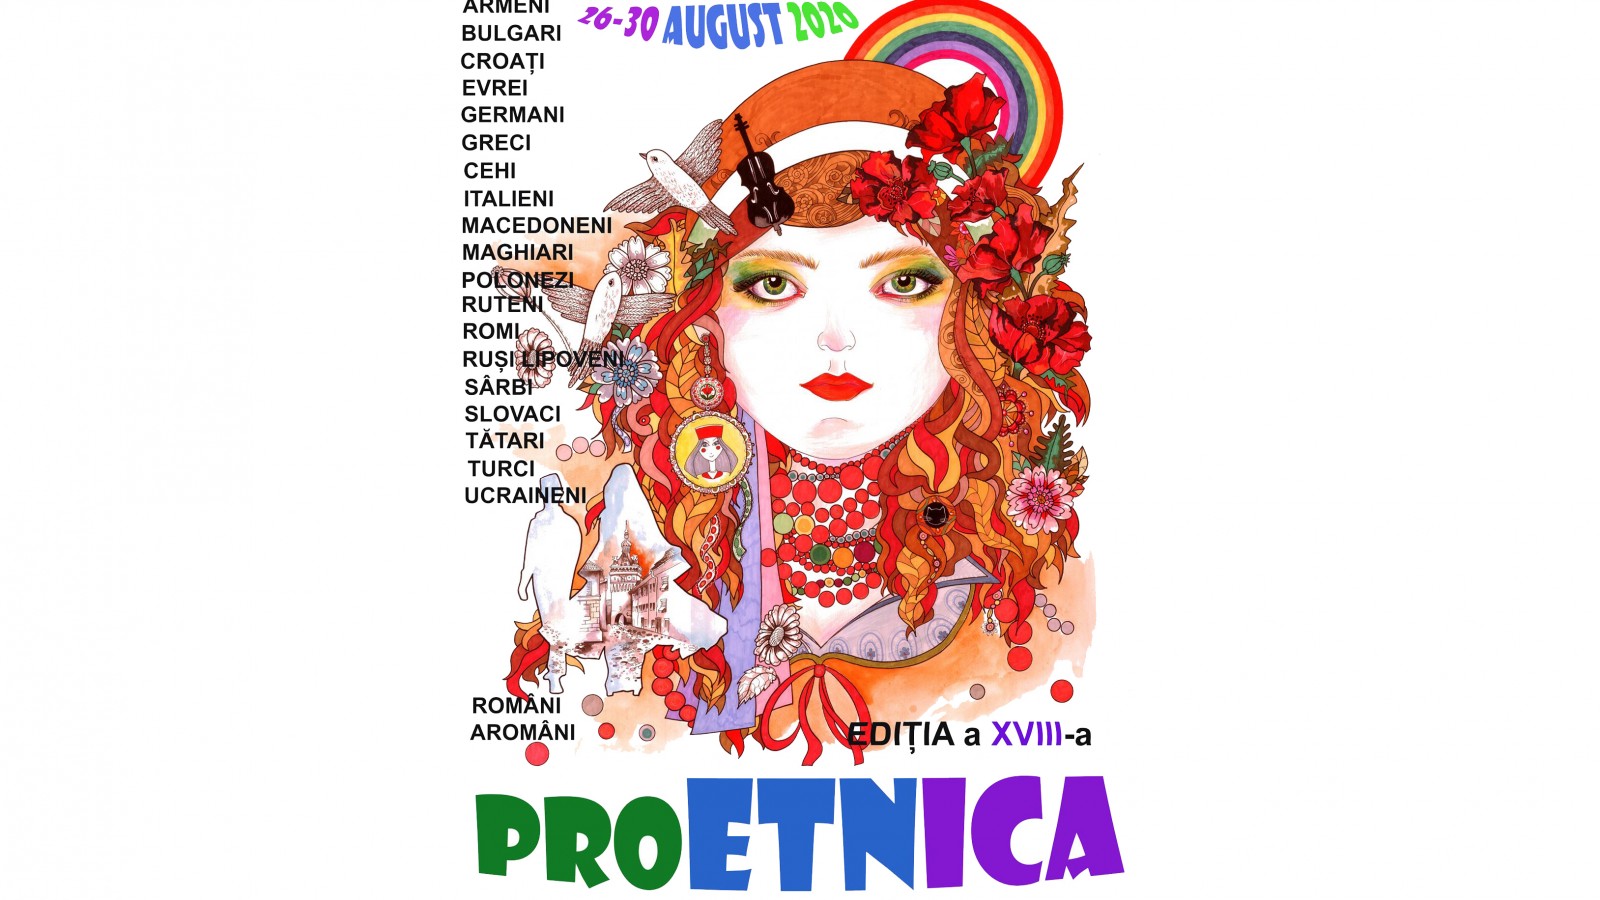 Festival Intercultural ProEtnica 2020 Sighișoara